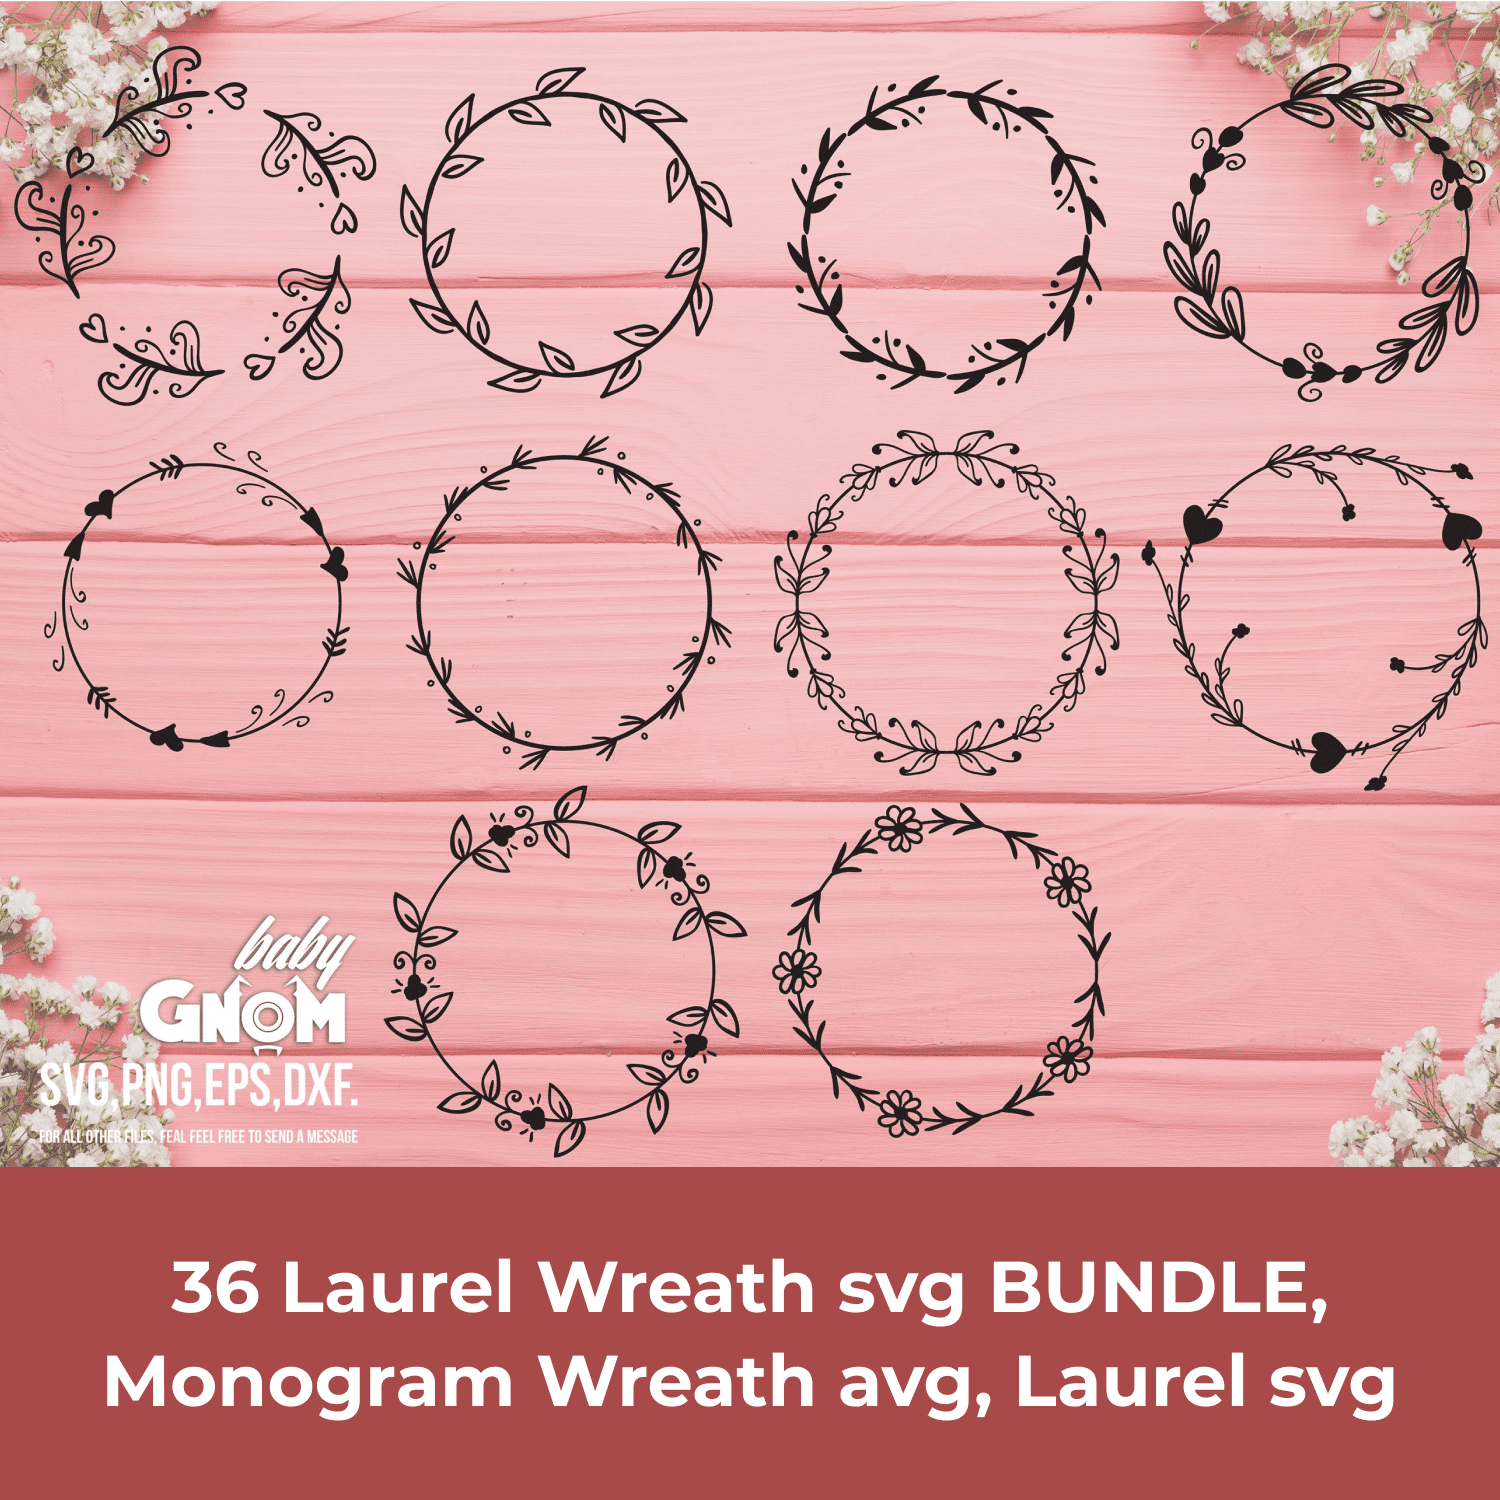 36 Laurel Wreath SVG BUNDLE, Monogram Wreath SVG, Laurel SVG cover.